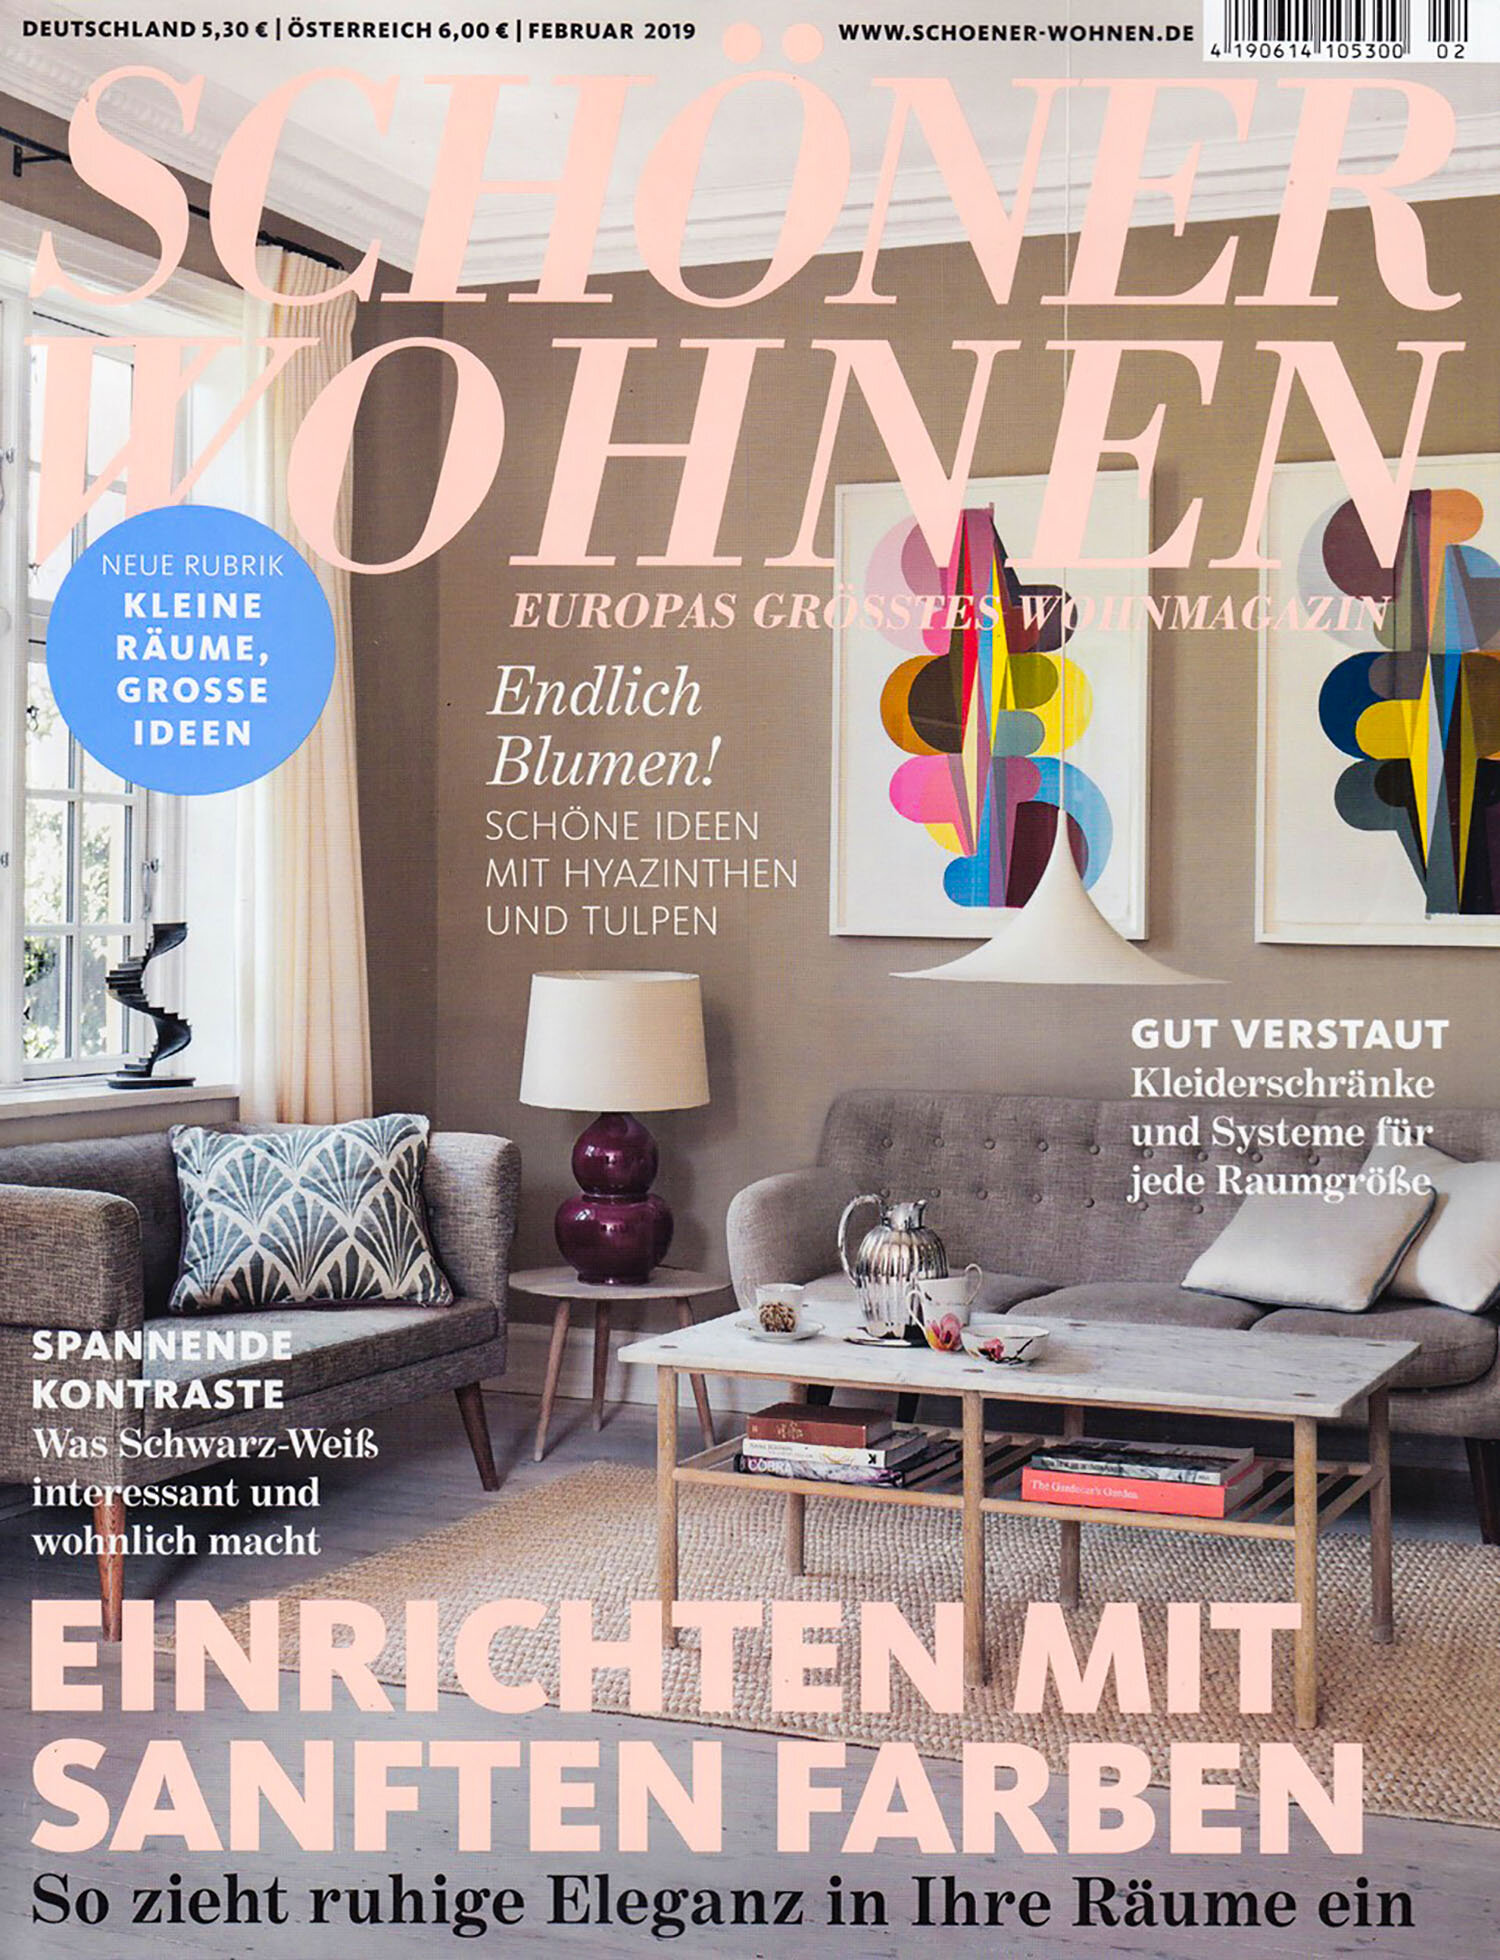 Schöner Wohnen Cover 02:19 SEBASTIAN ZENKER INTERIOR DESIGN .jpg